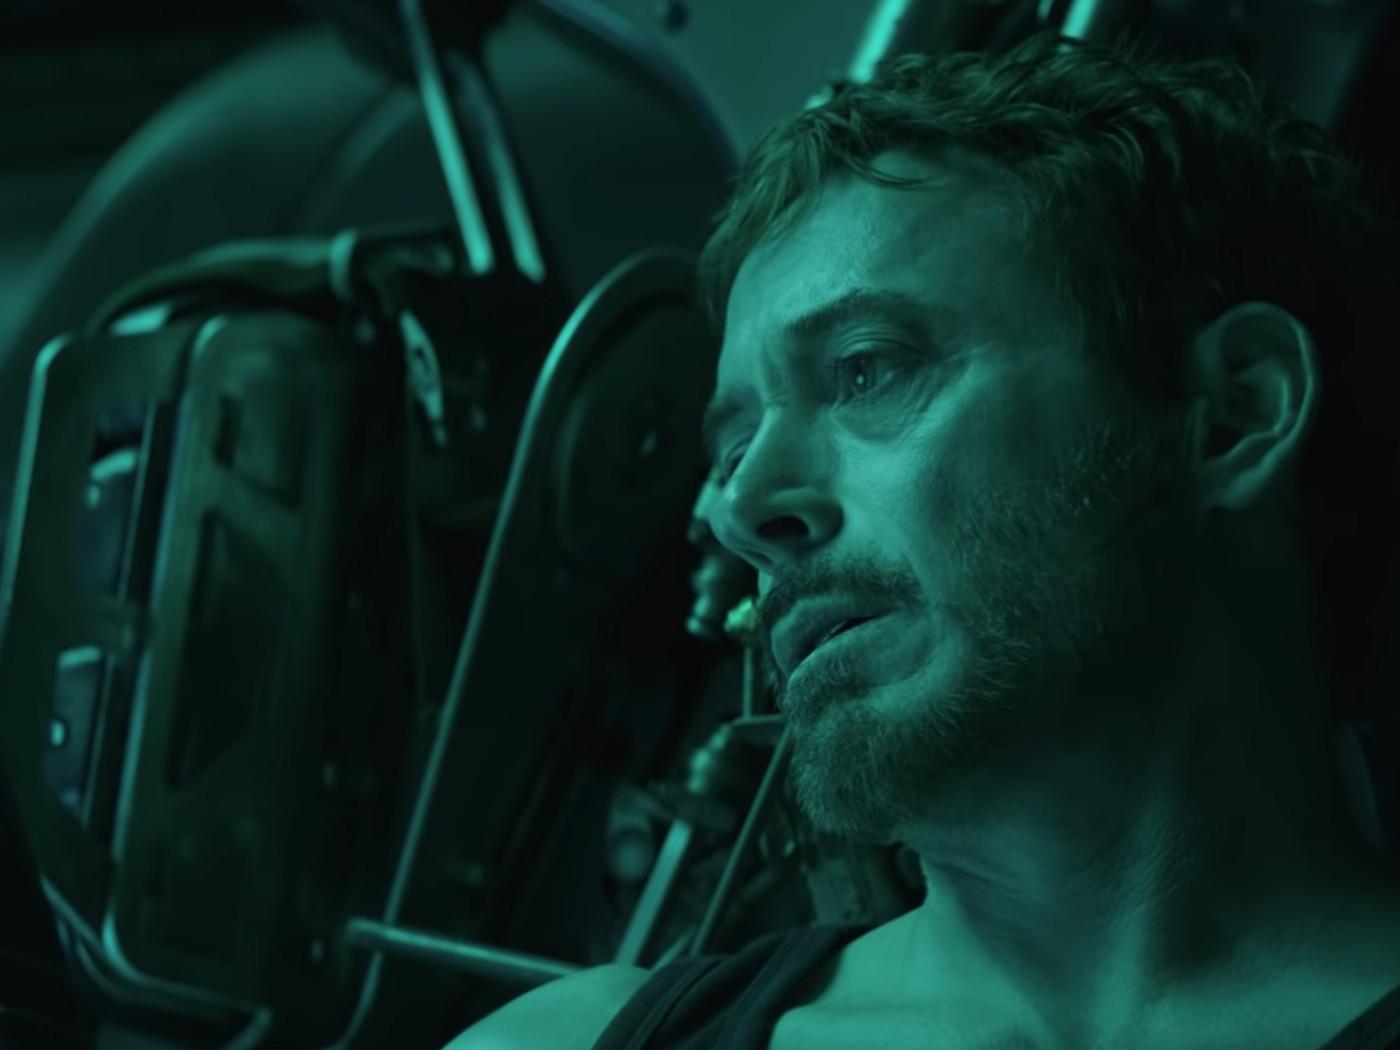 Avengers 4: Endgame trailer hints that Captain Marvel will save